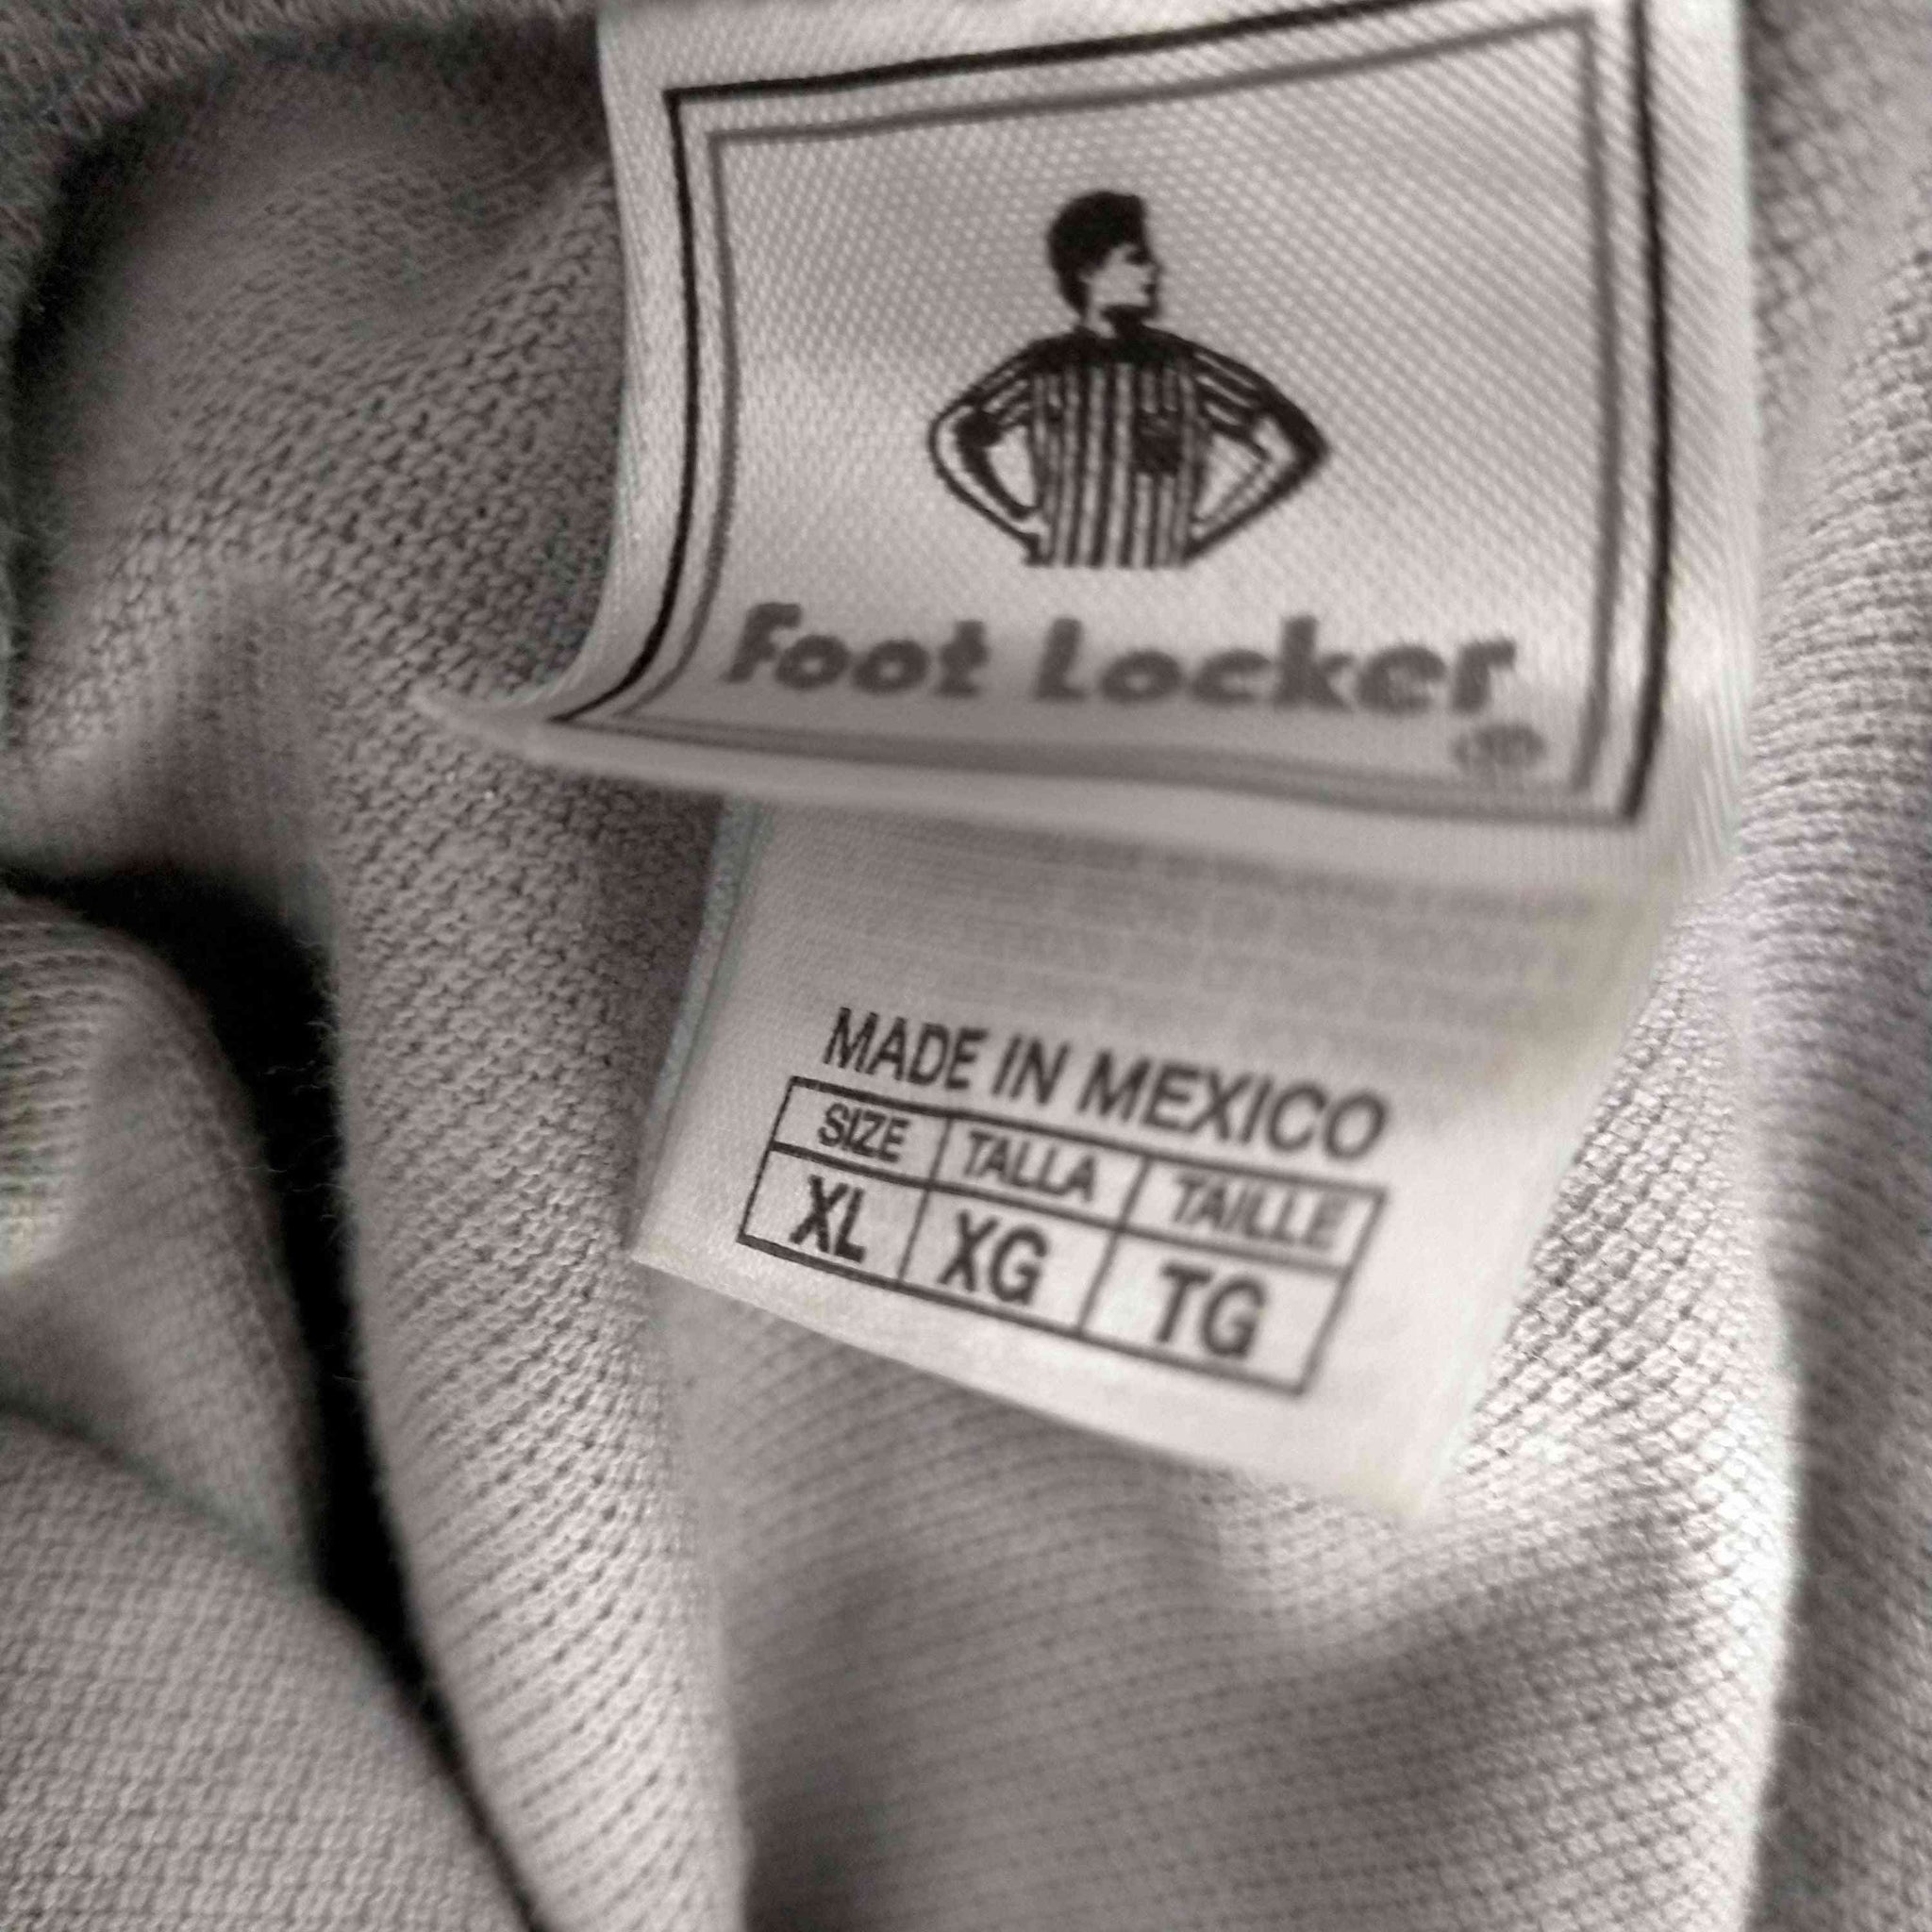 Foot Locker(フットロッカー)LAS VEGAS 刺繍 ポロシャツ